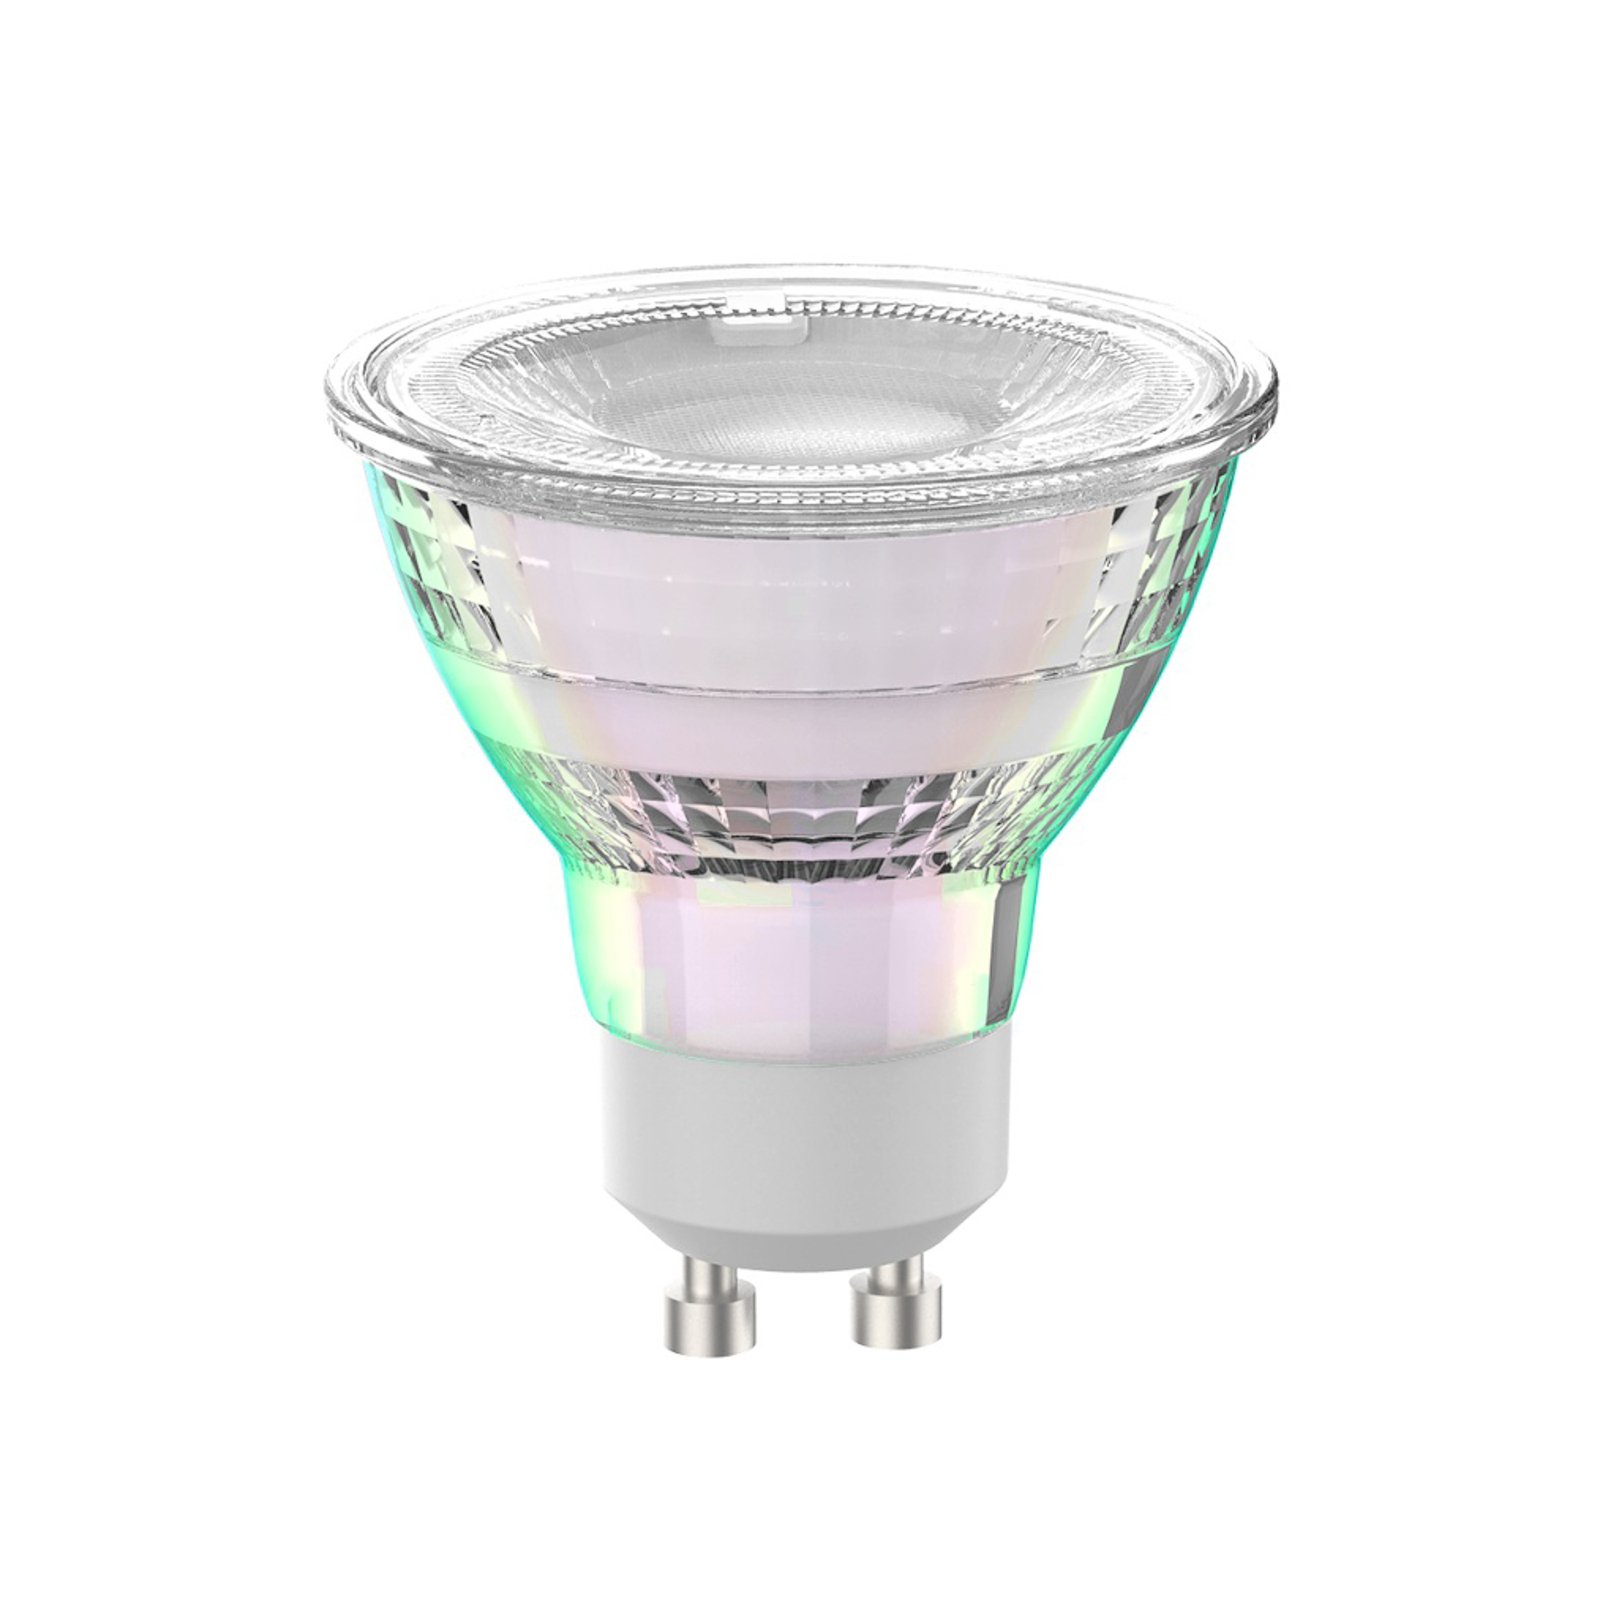 Arcchio LED-Leuchtmittel GU10 2,5W 4000K 450lm Glas 10er-Set